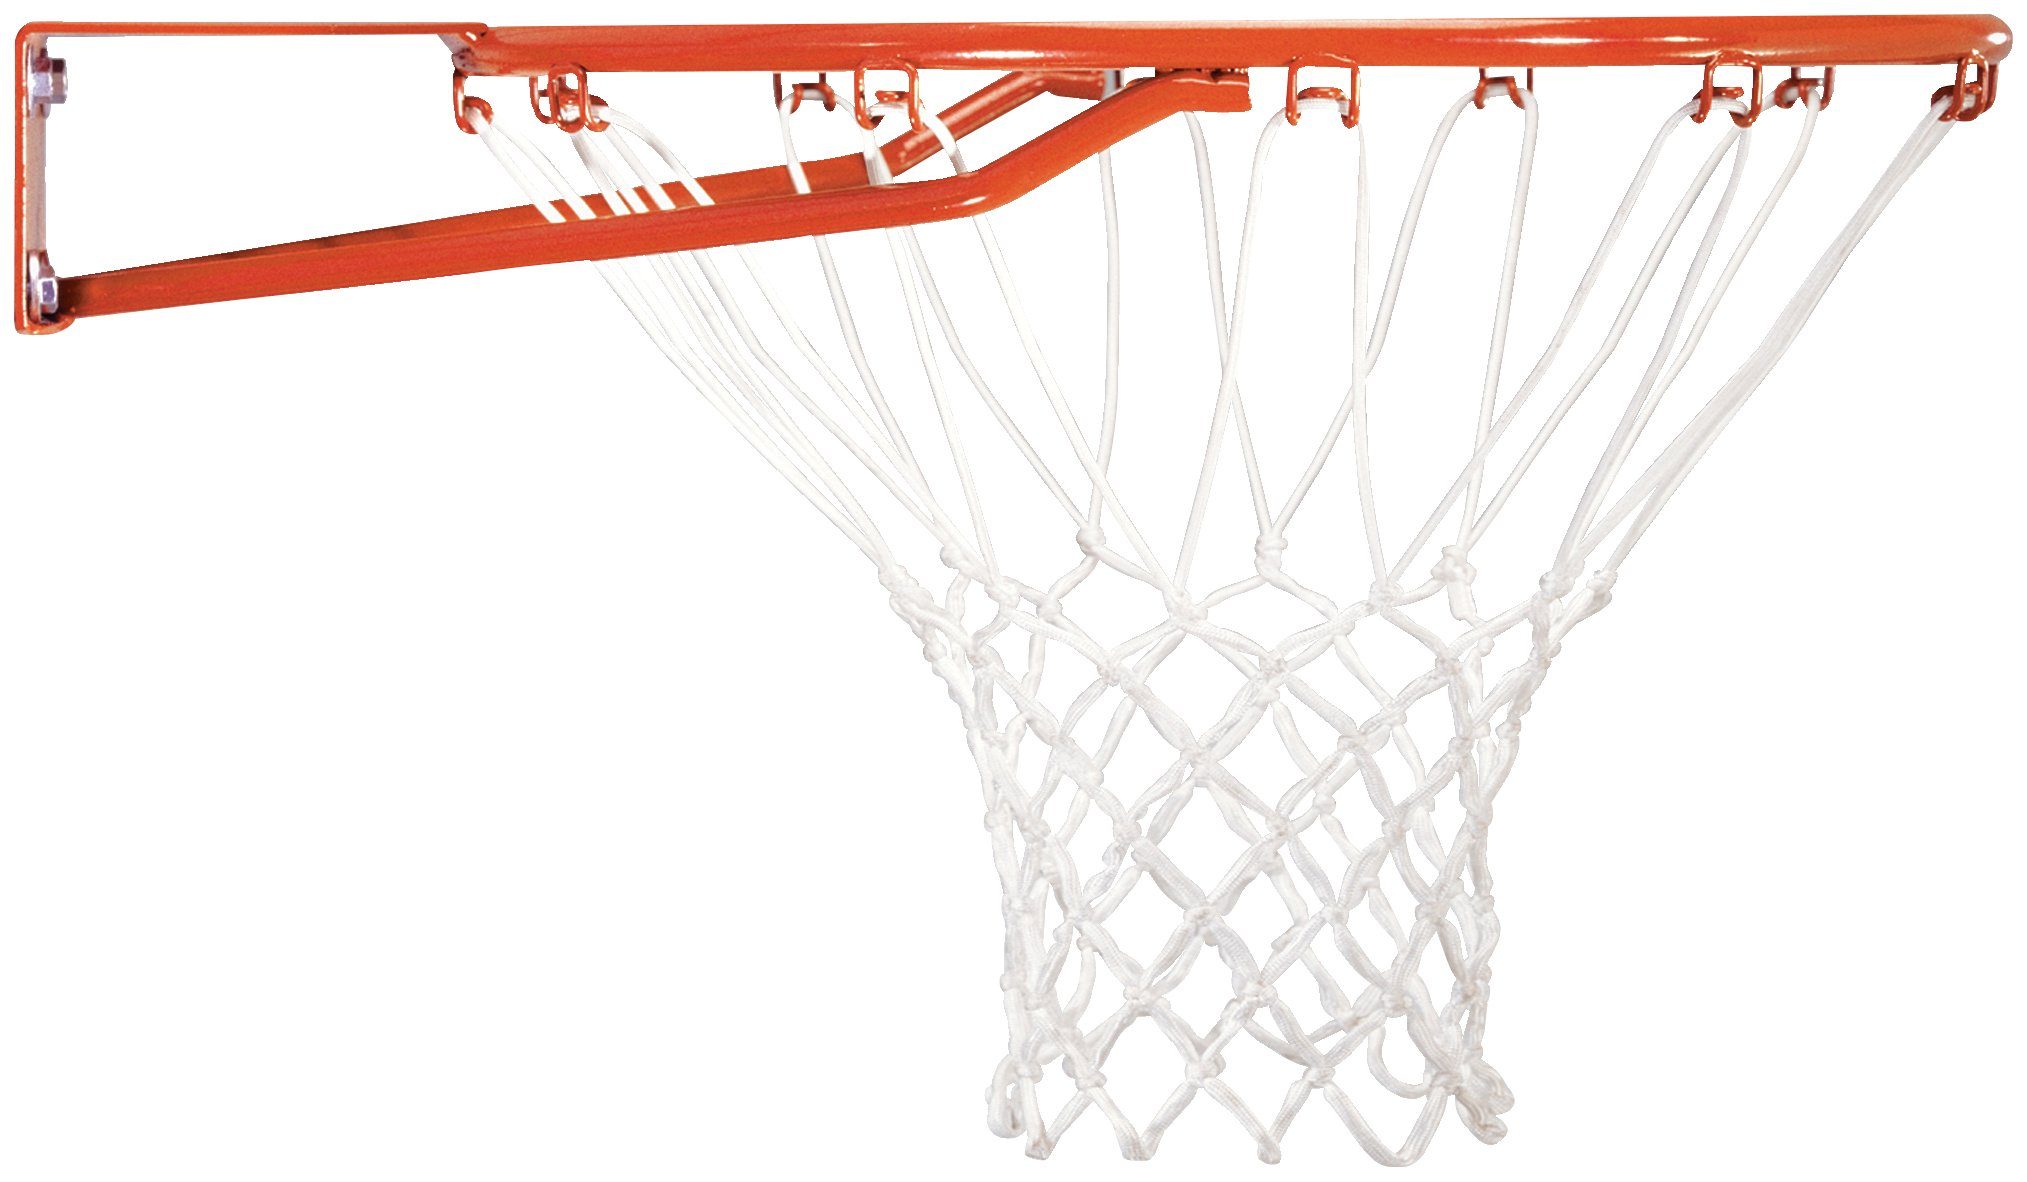 Basketballkorb Alabama, 50NRTH schwarz/rot höhenverstellbar